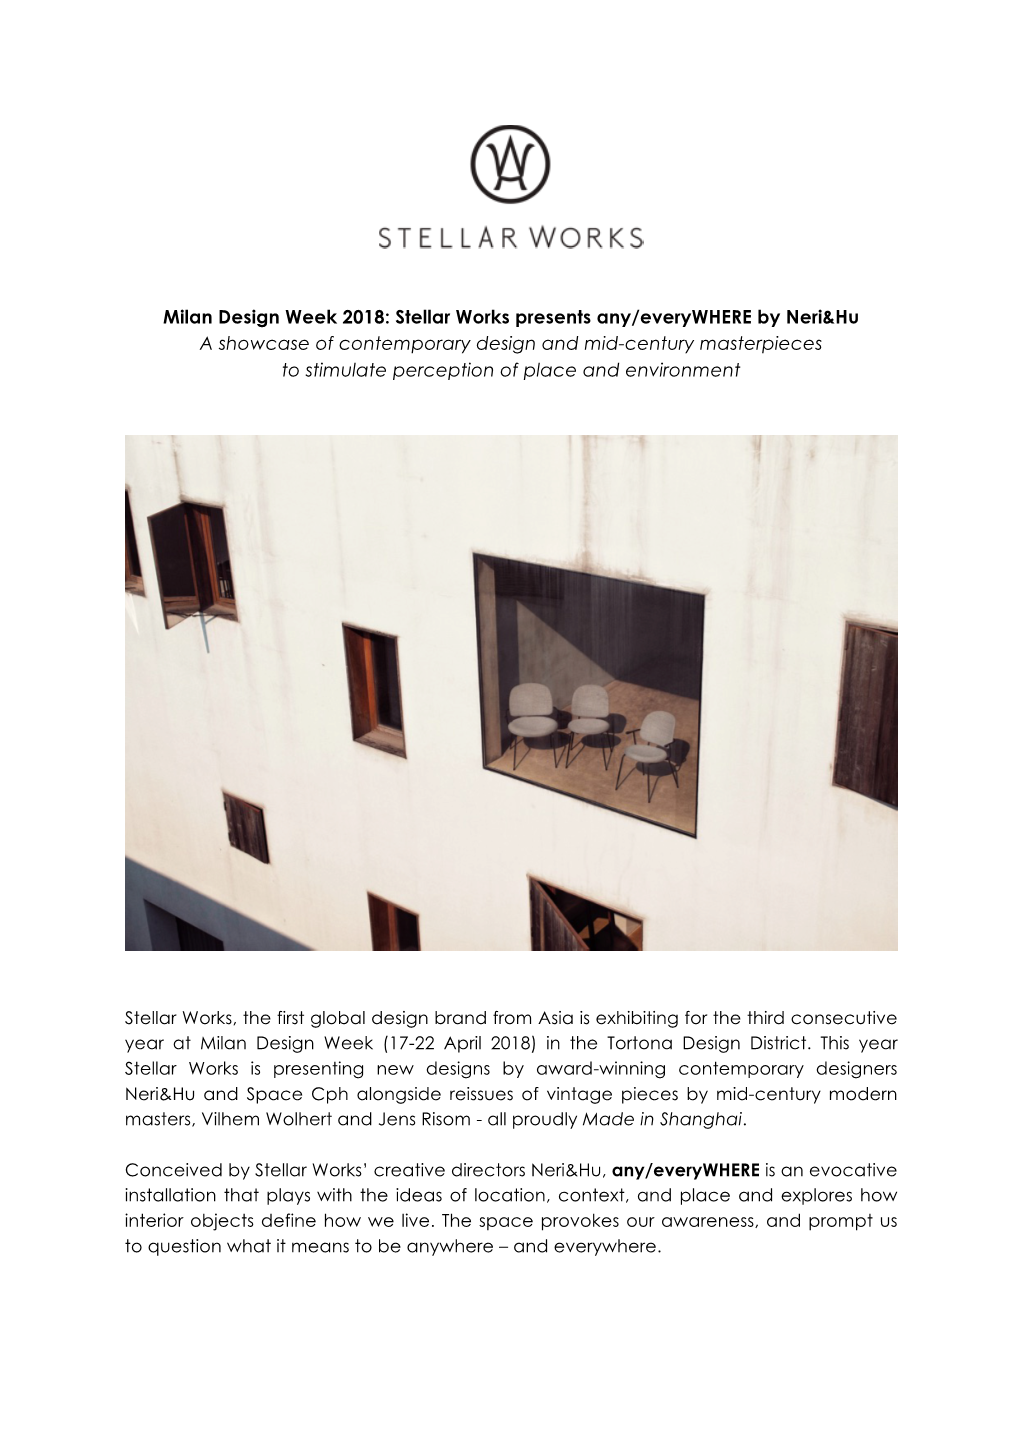 Milan Design Week 2018: Stellar Works Presents Any/Everywhere